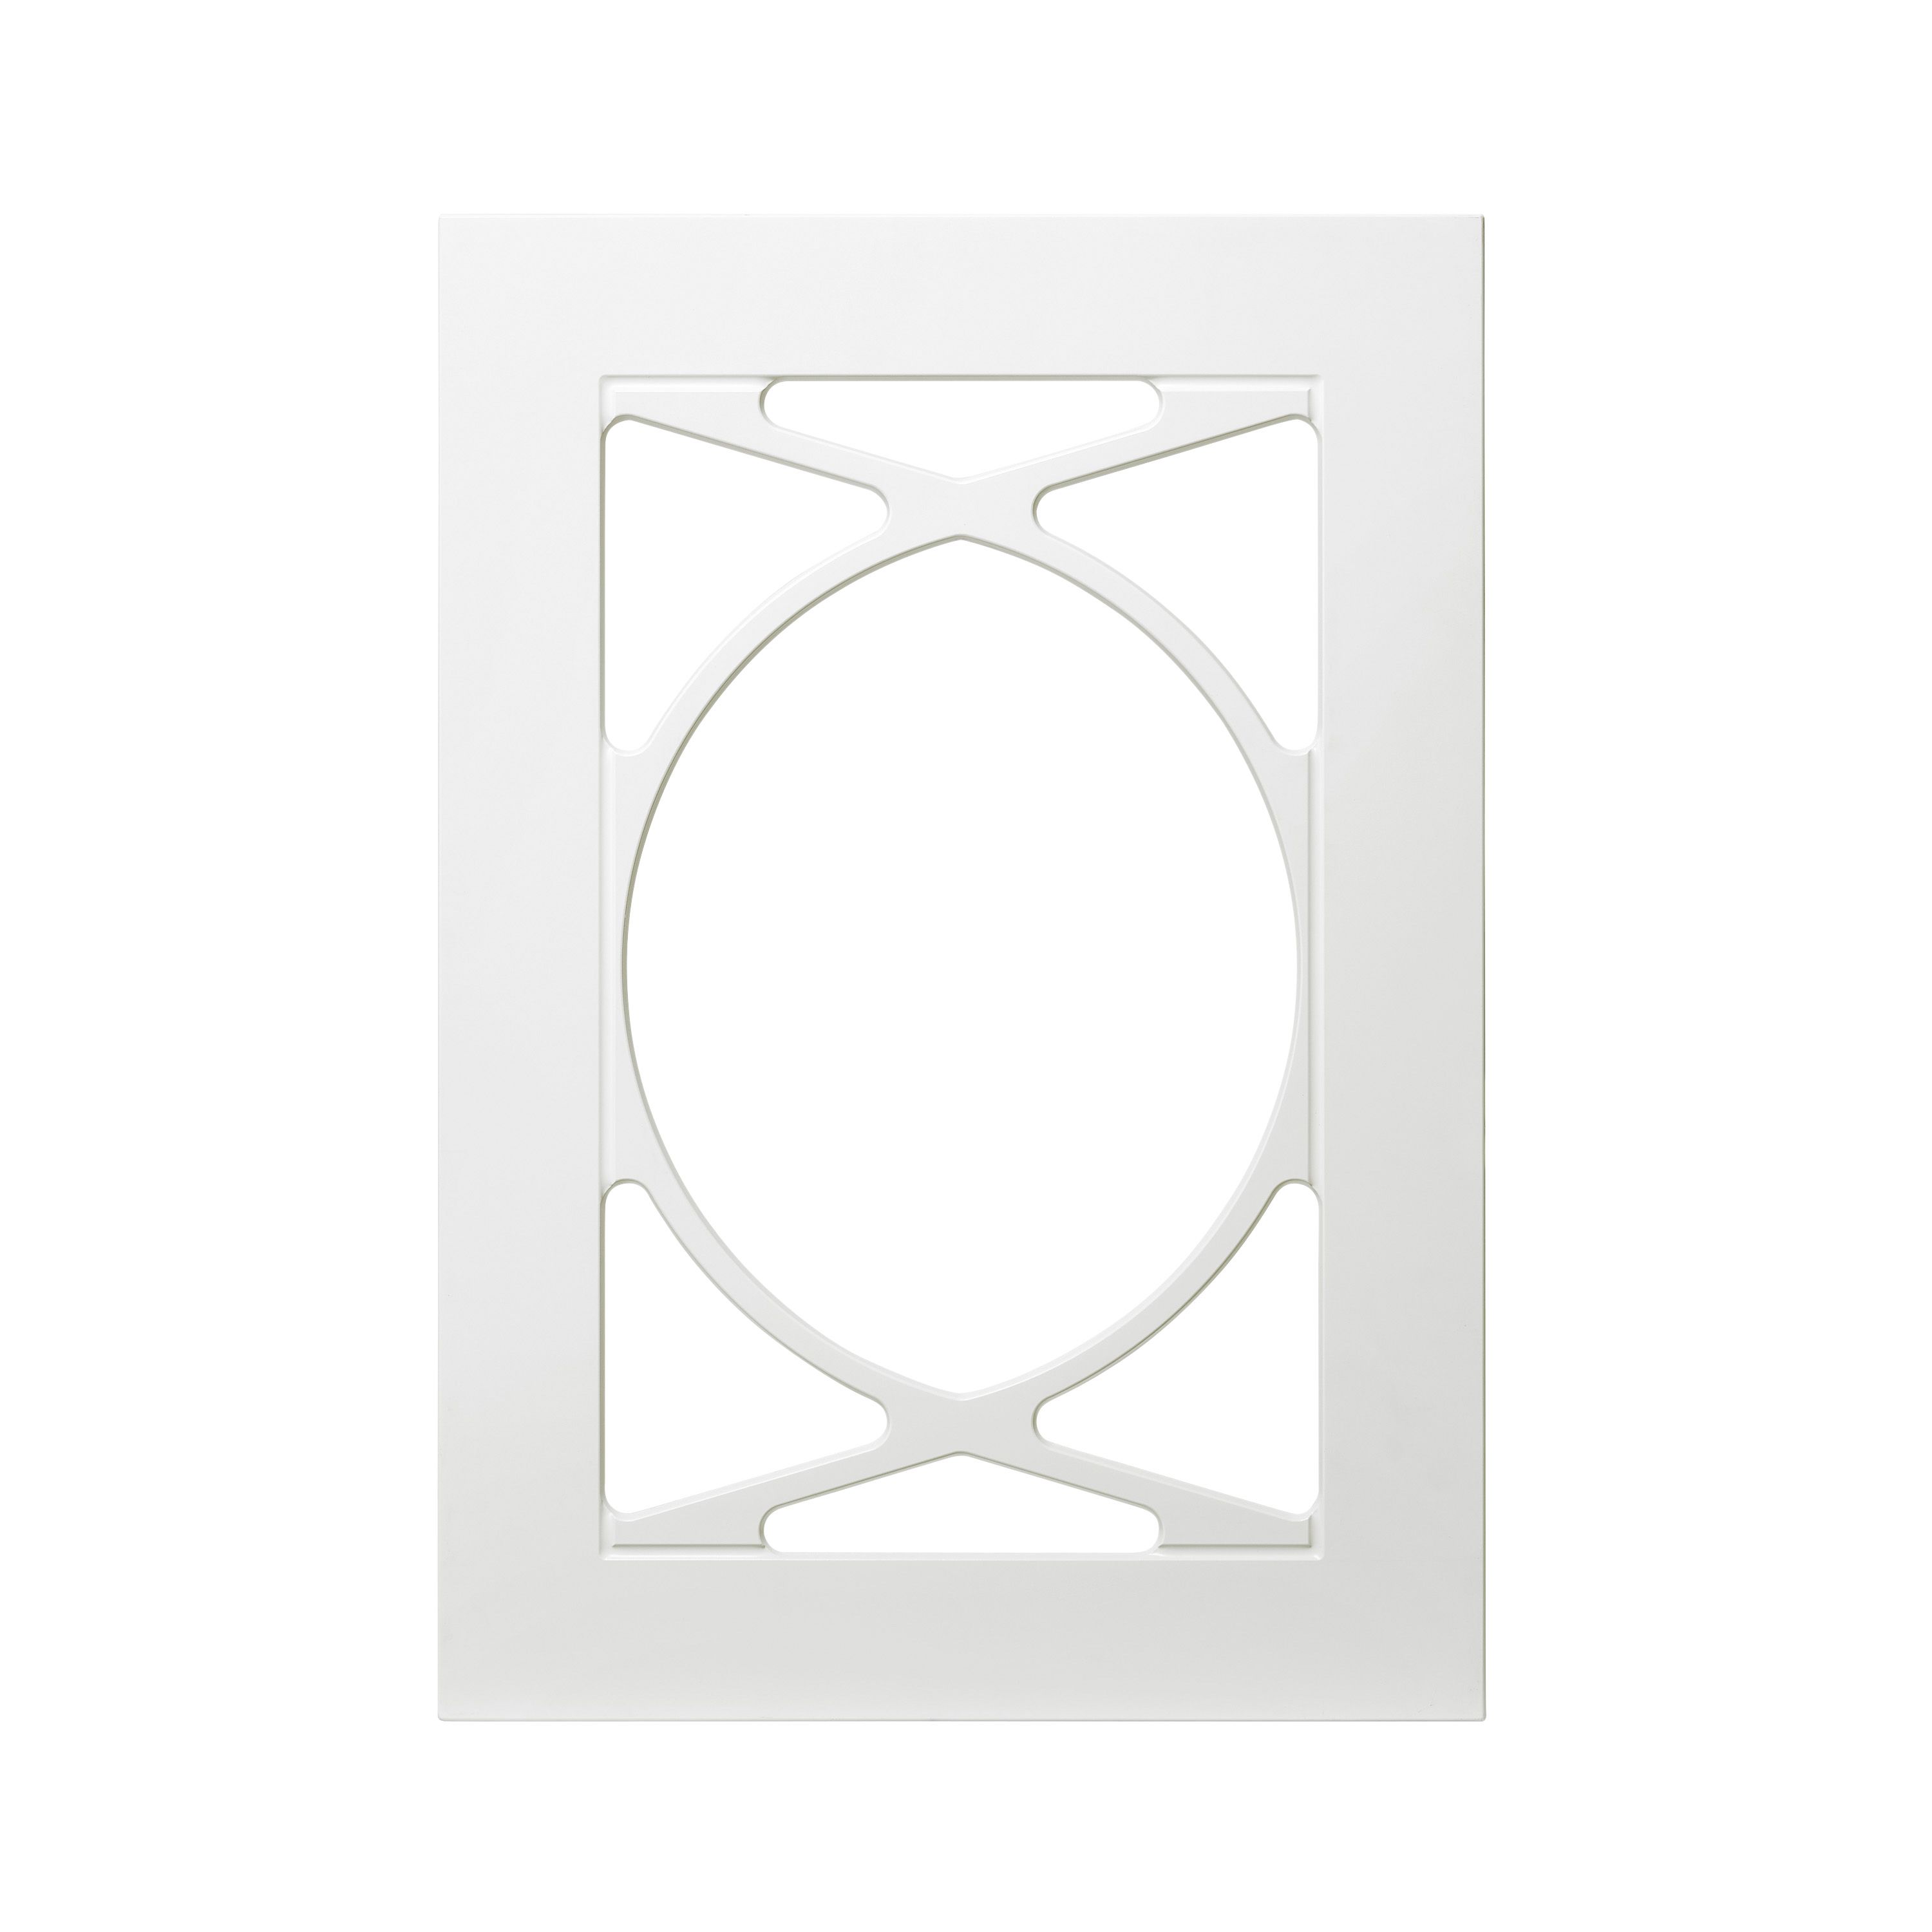 GoodHome Artemisia Matt white classic shaker Glazed Cabinet door (W)500mm (H)715mm (T)18mm